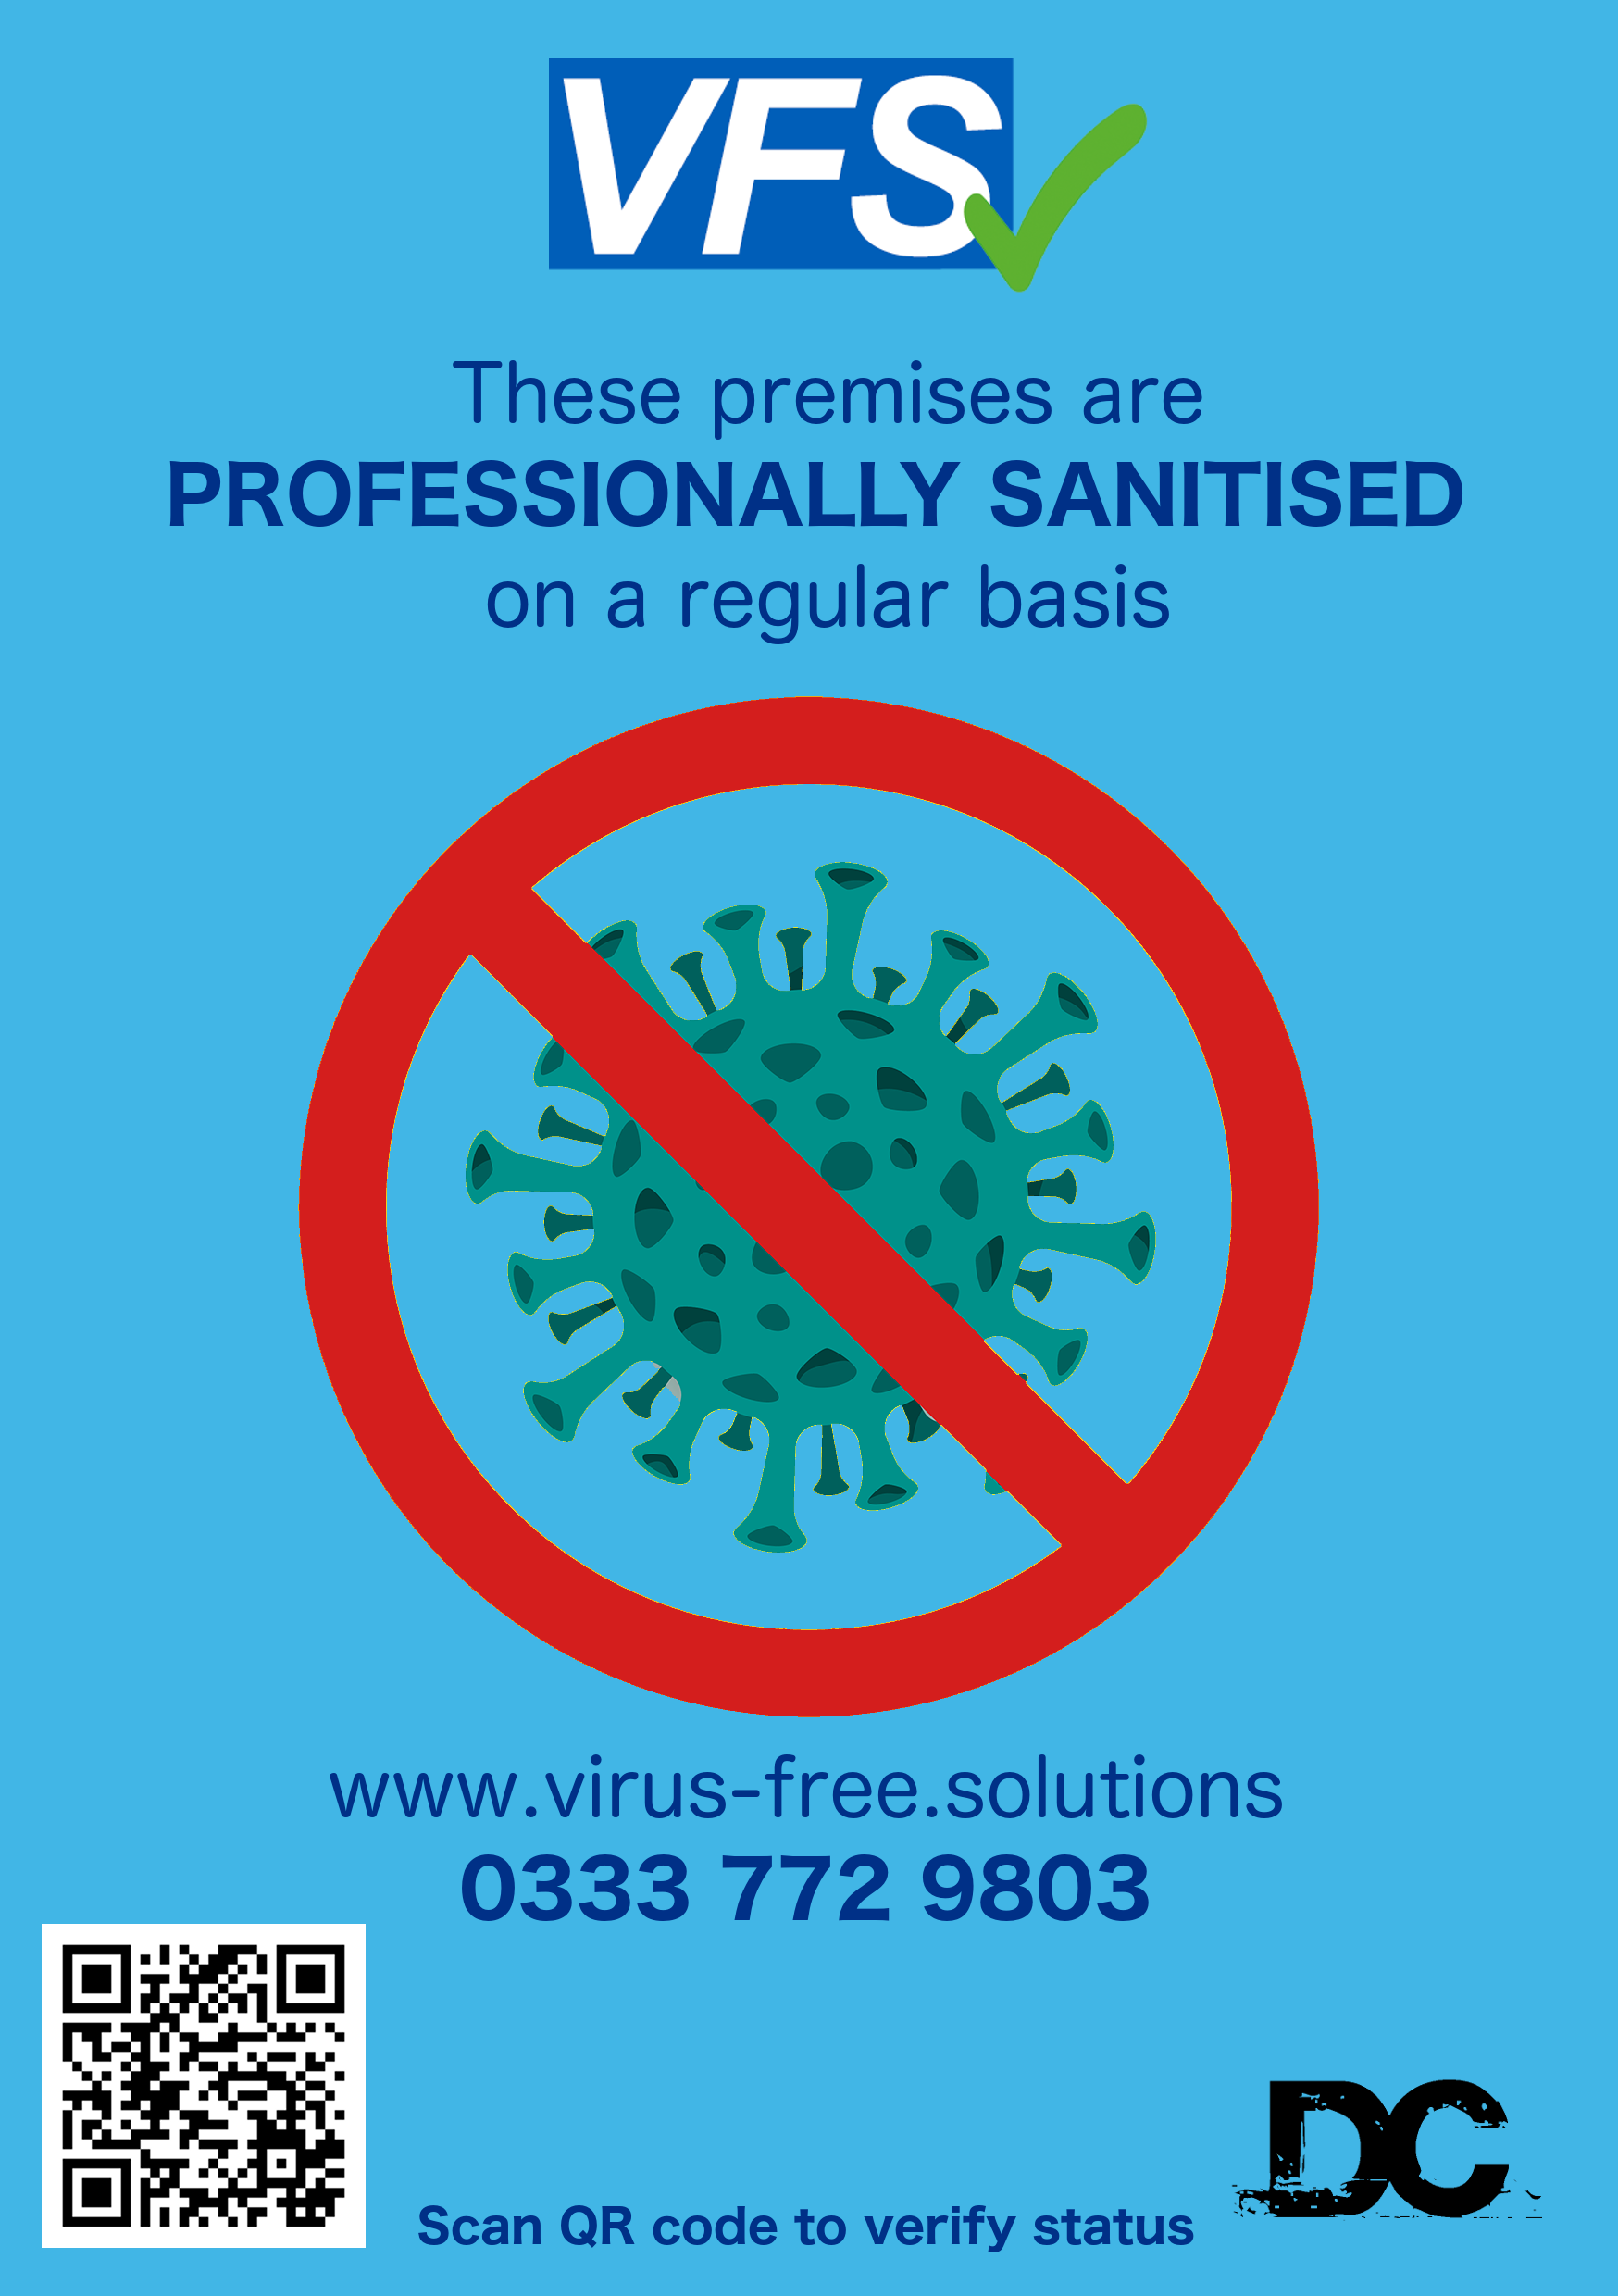 Virus-Free Solutions premises sticker